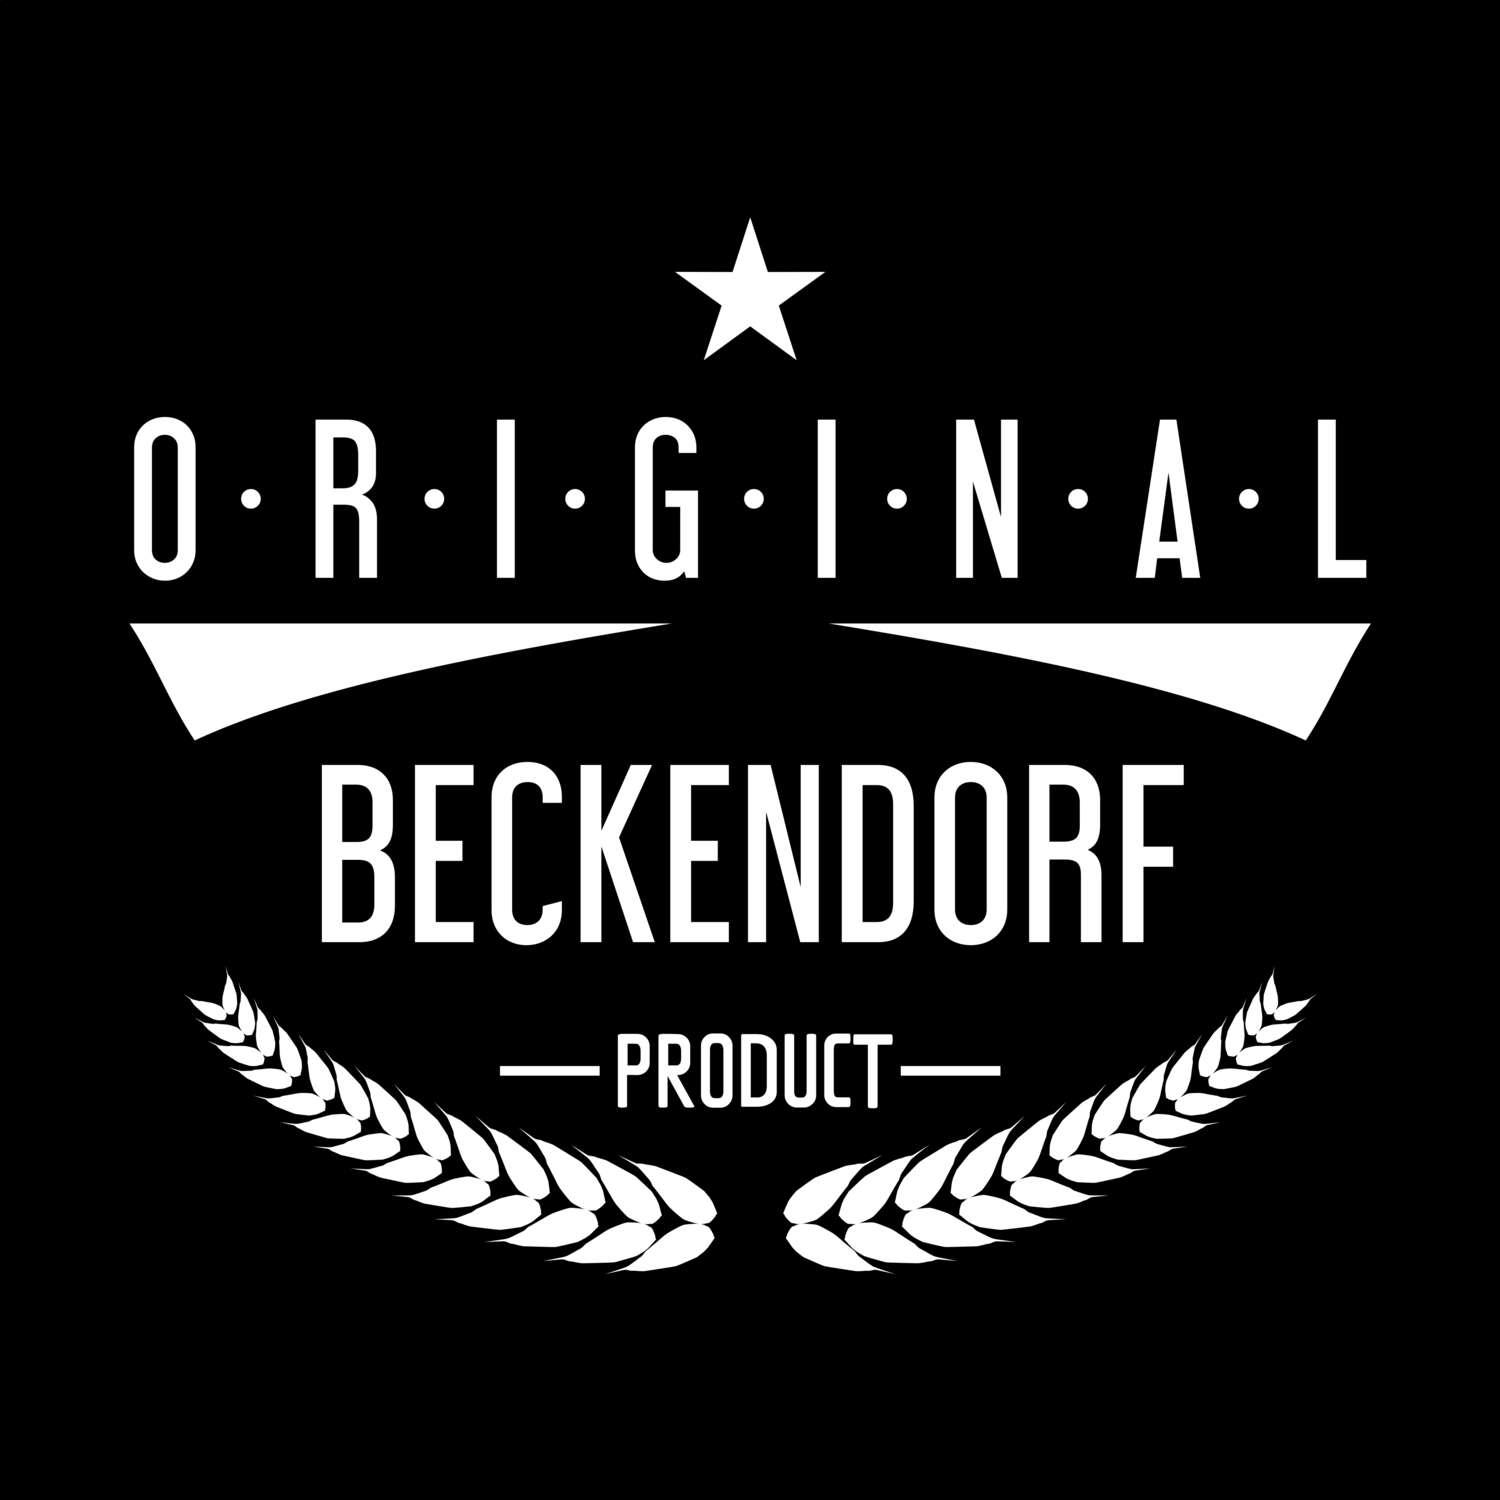 Beckendorf T-Shirt »Original Product«